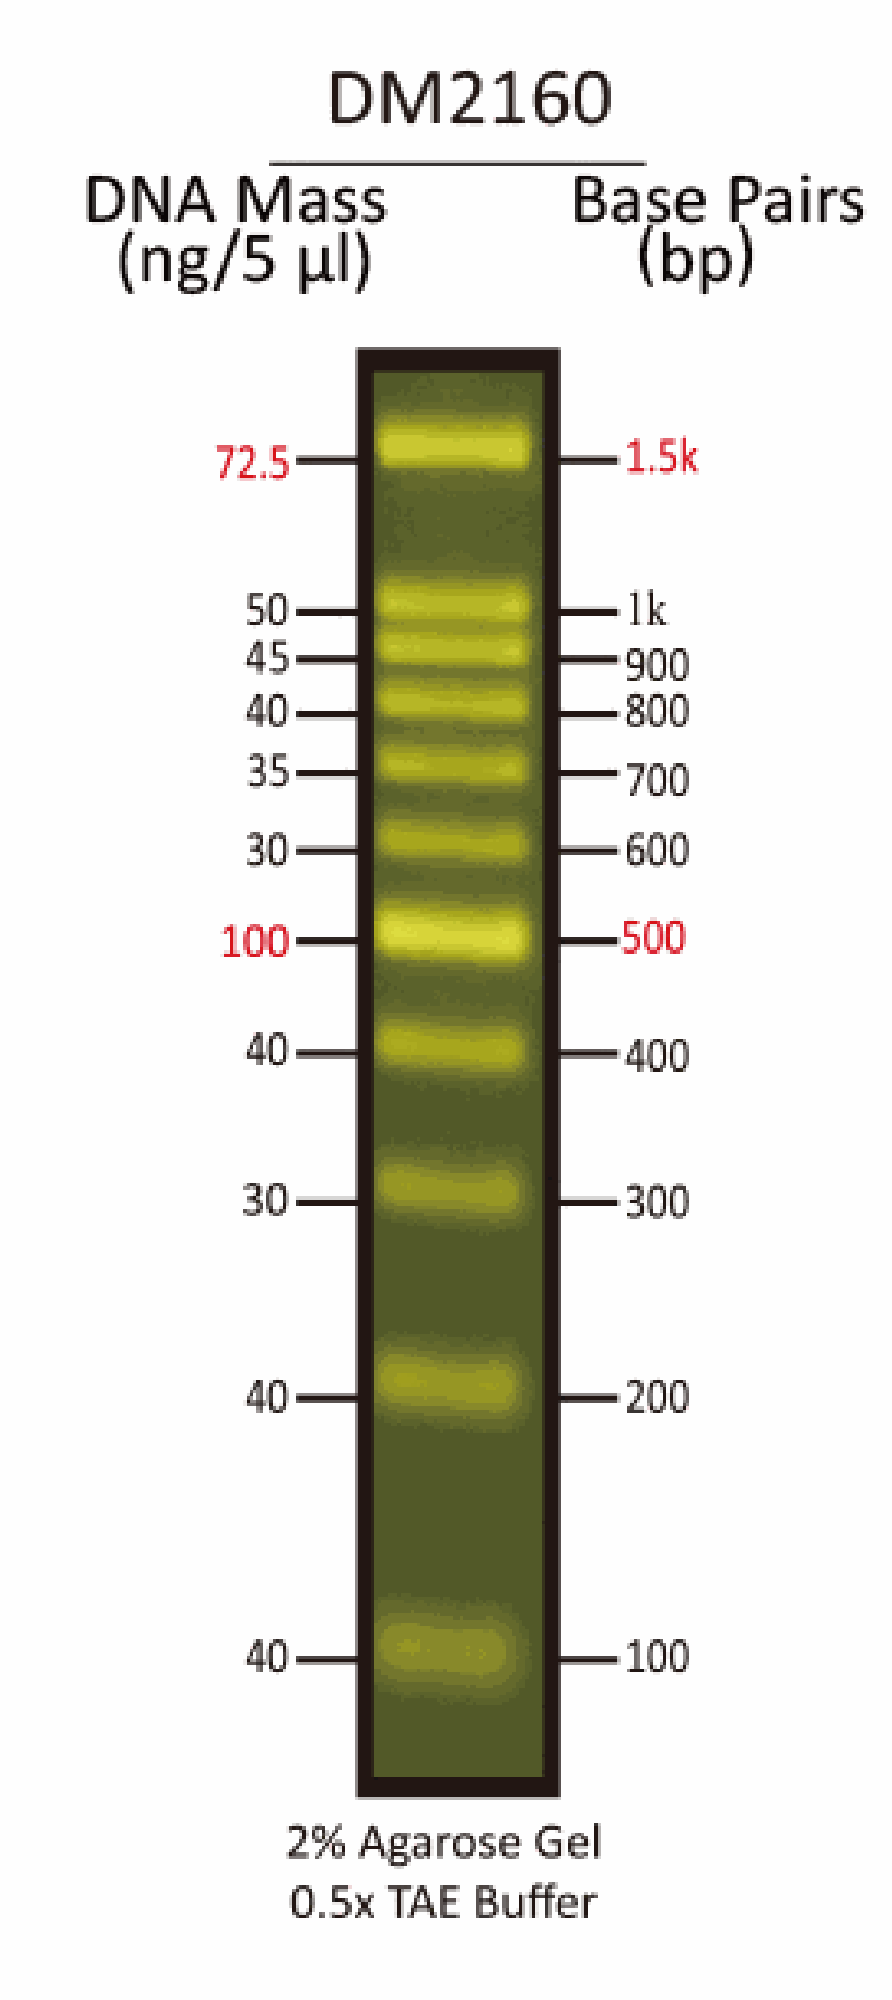 FluoroBand™ 100 bp Fluorescent DNA Ladder, 500 μl